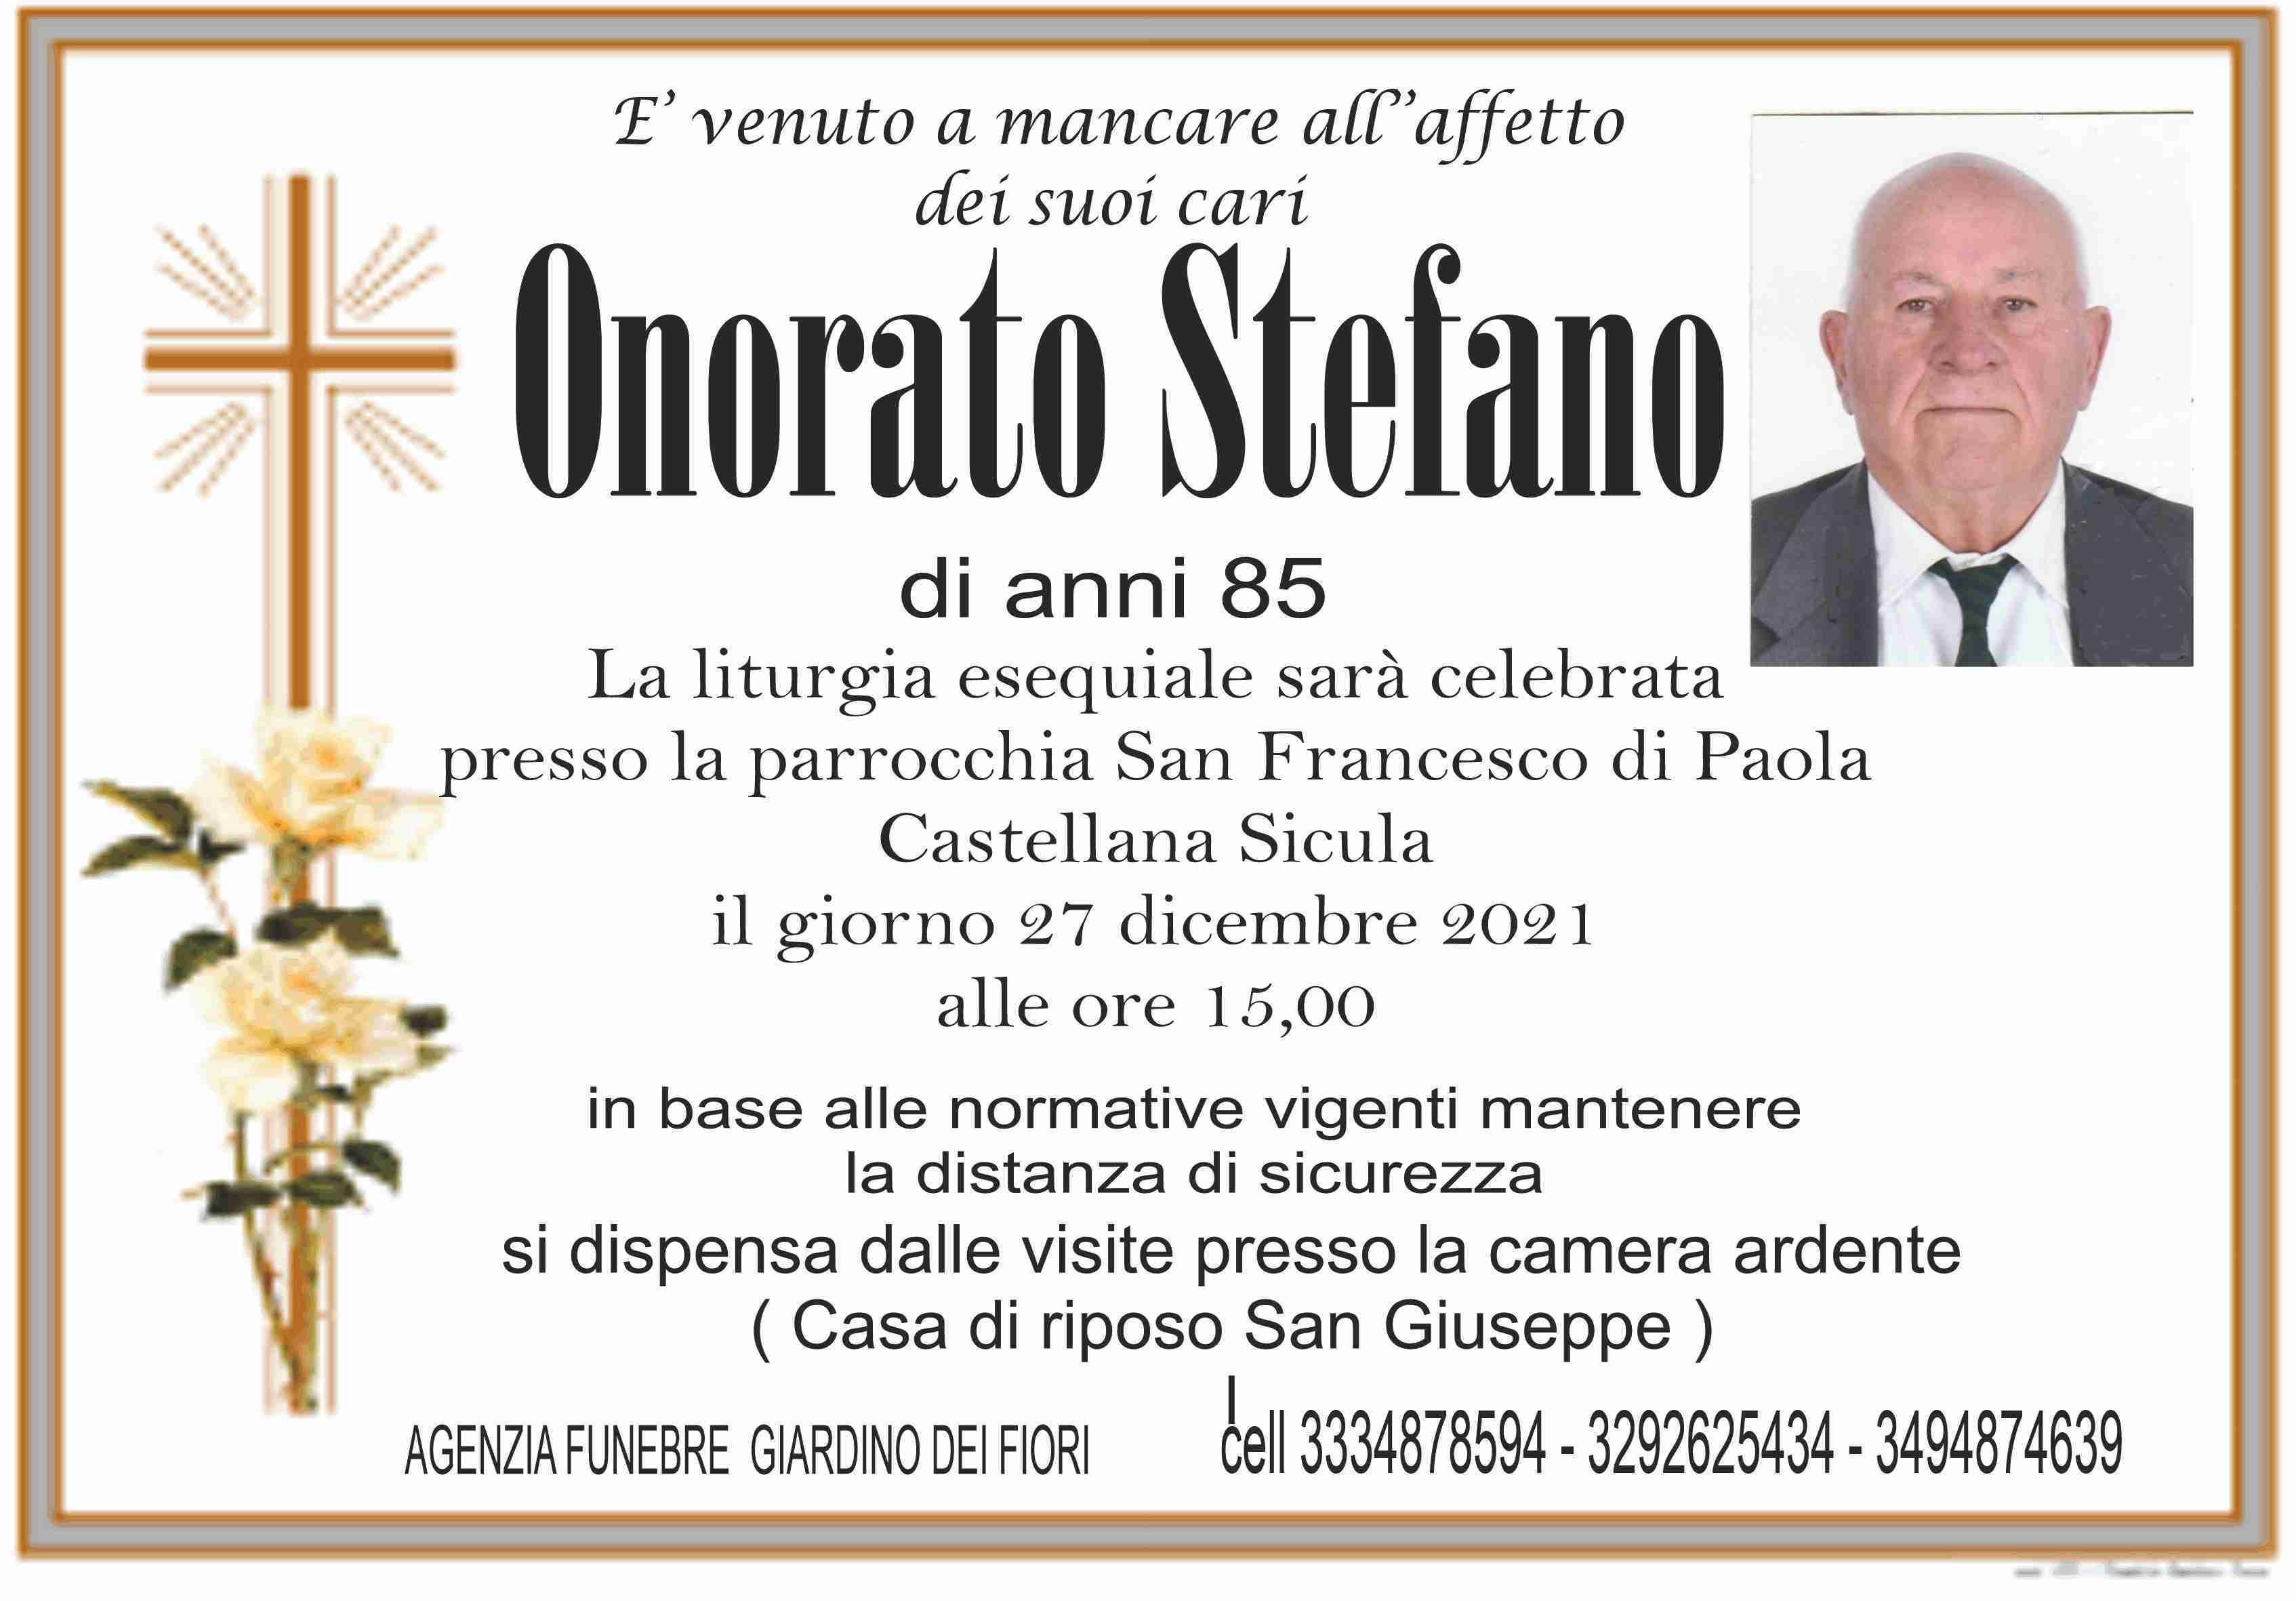 Stefano Onorato